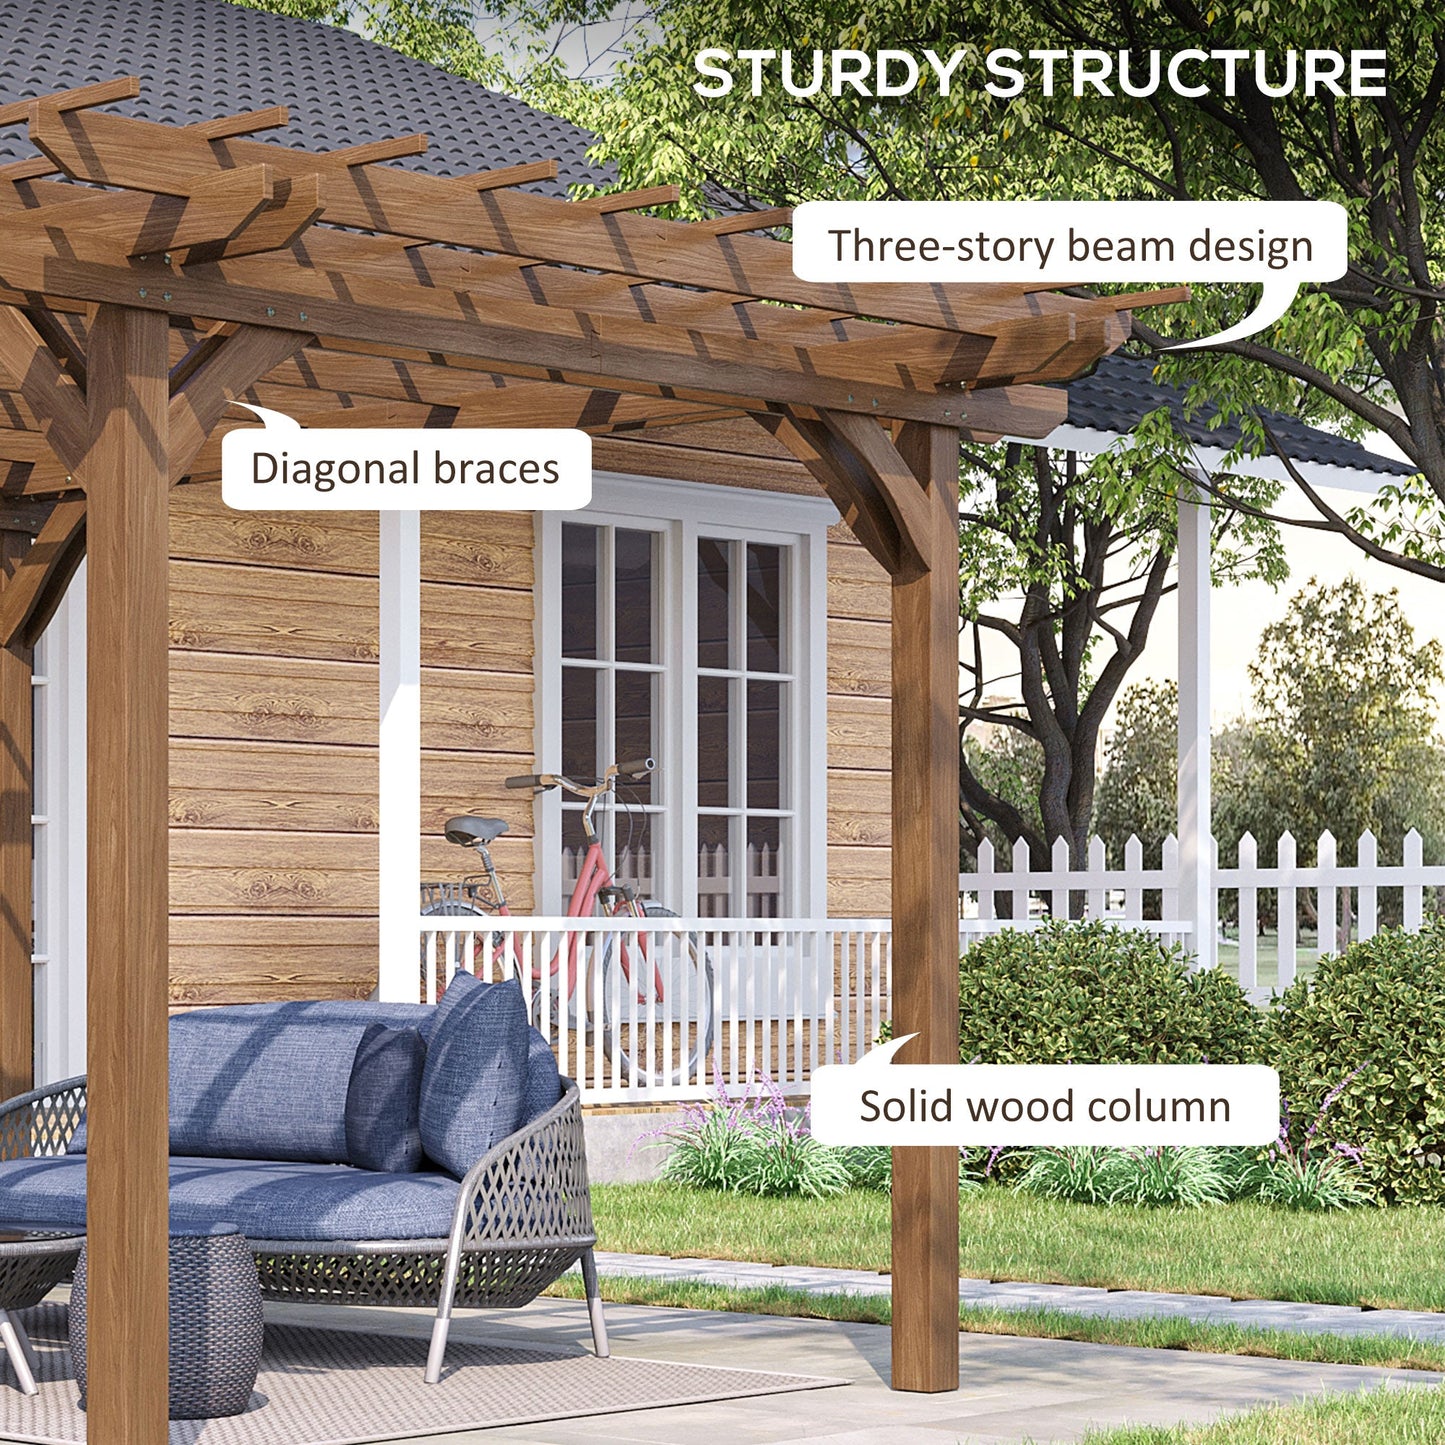 -Outsunny 12' x 10' Outdoor Pergola, Wood Gazebo Grape Trellis with Stable Structure for Garden, Patio, Backyard, Deck - Outdoor Style Company